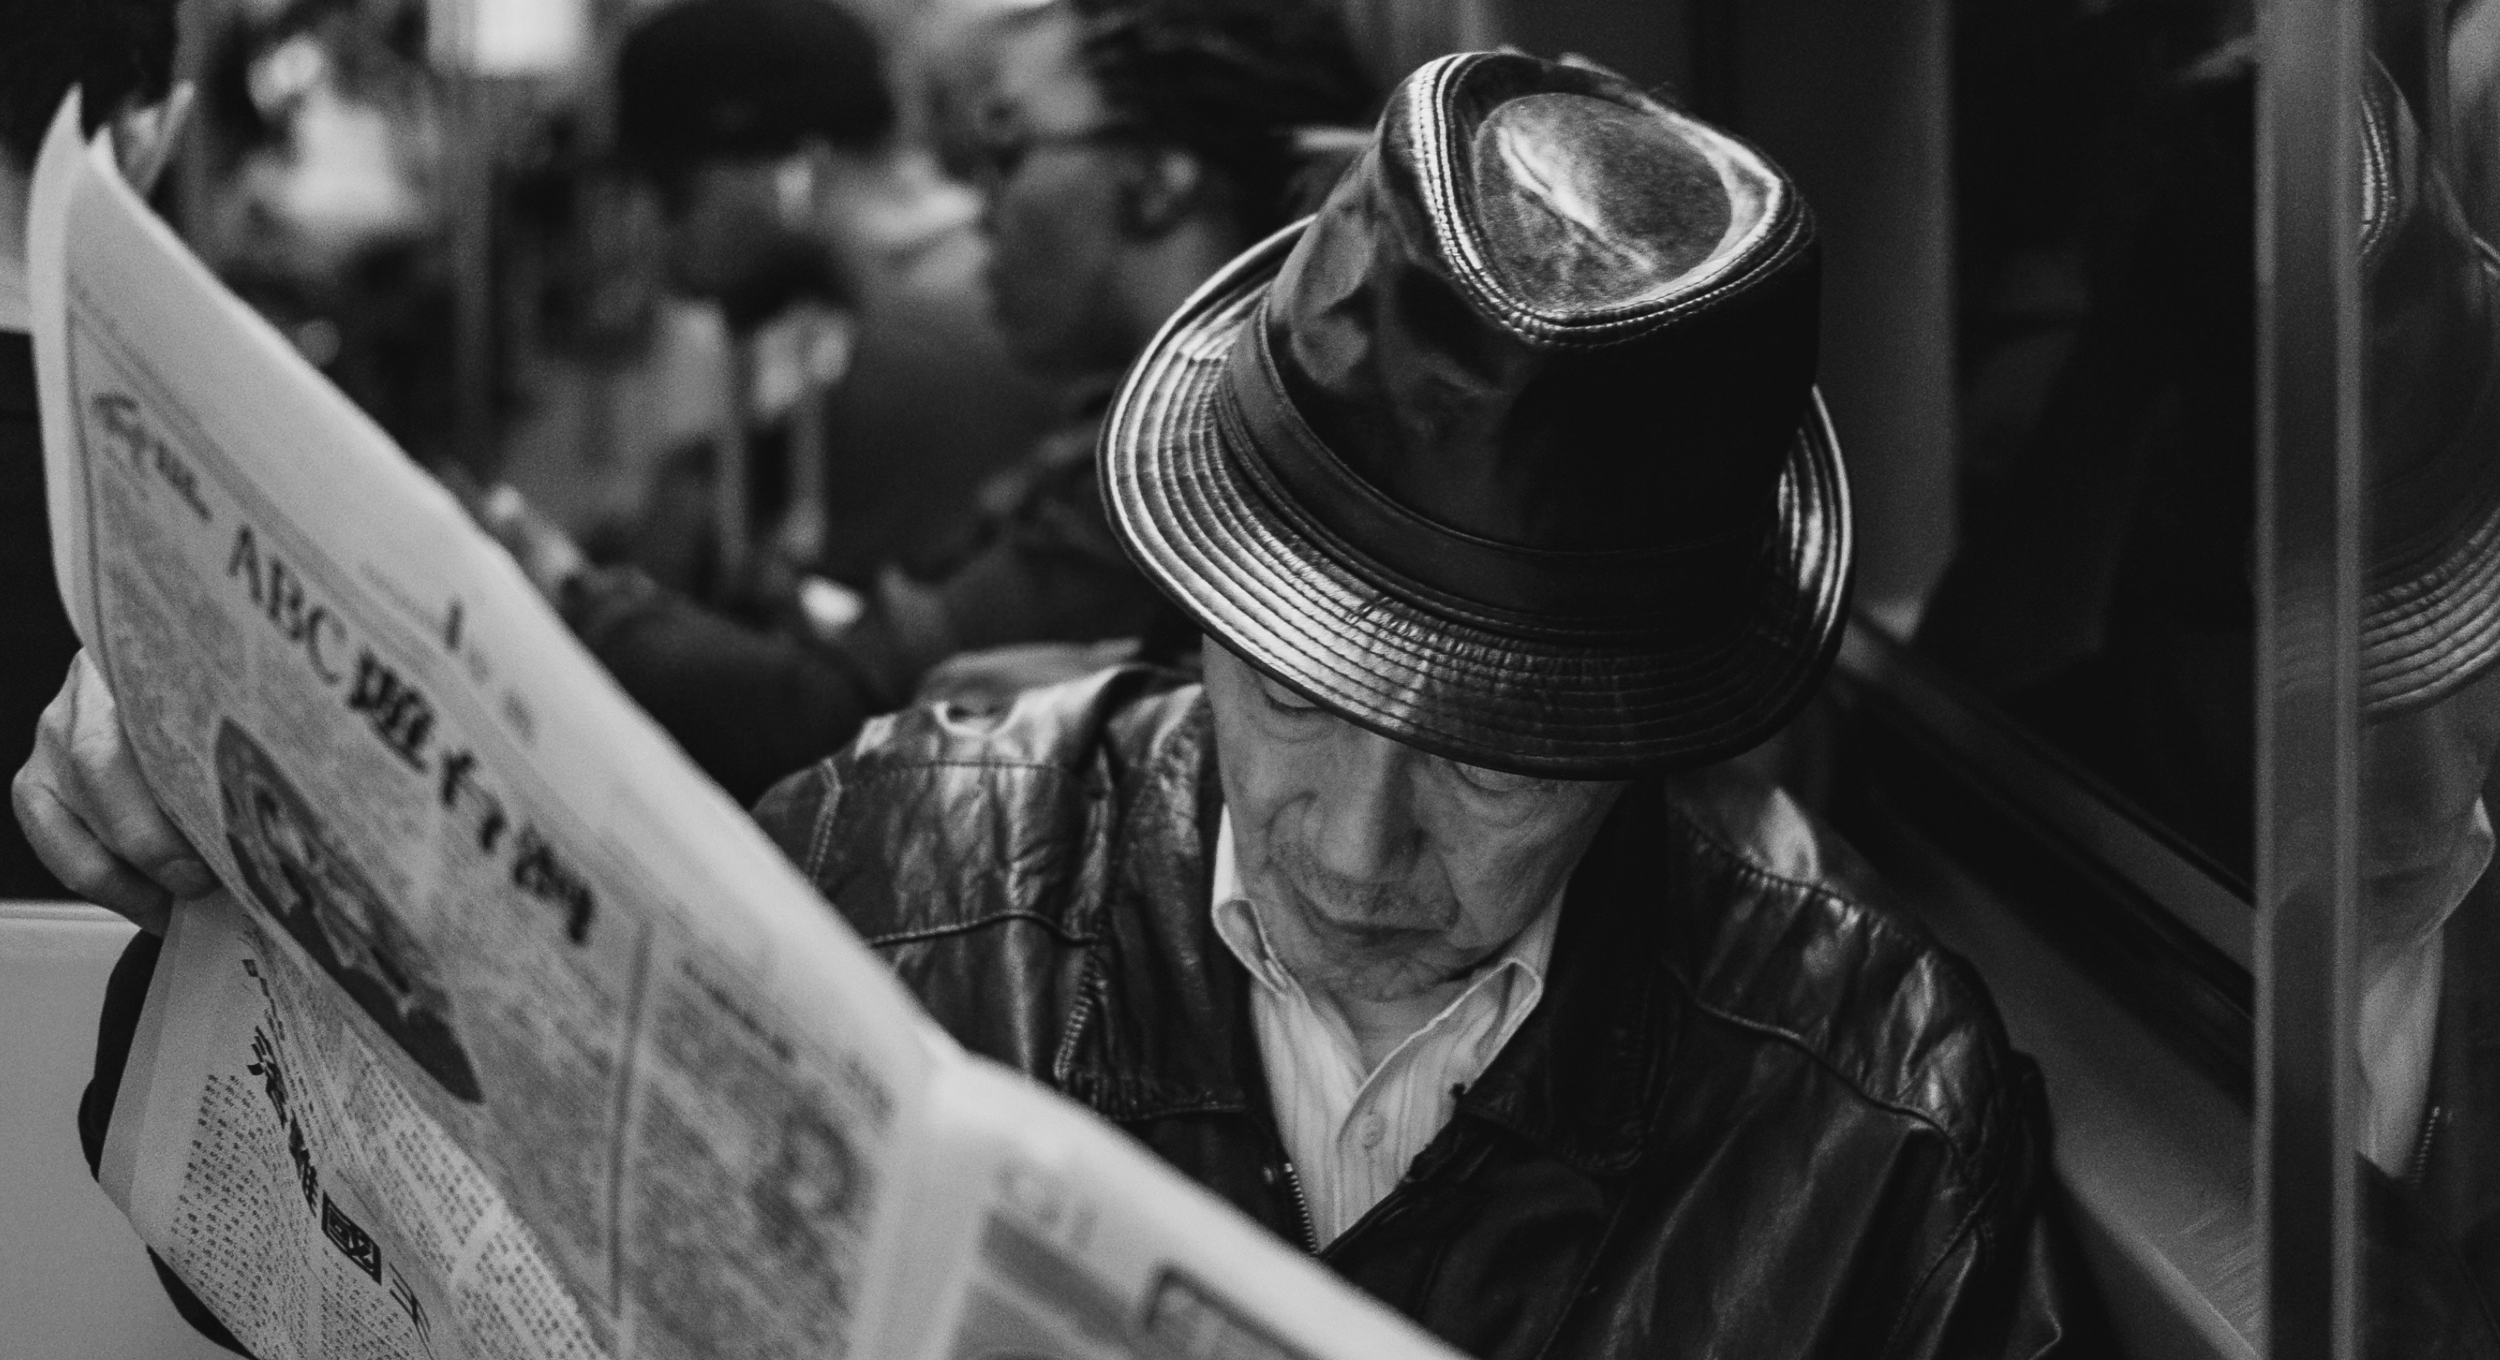 When he heard the news he. He read newspapers.